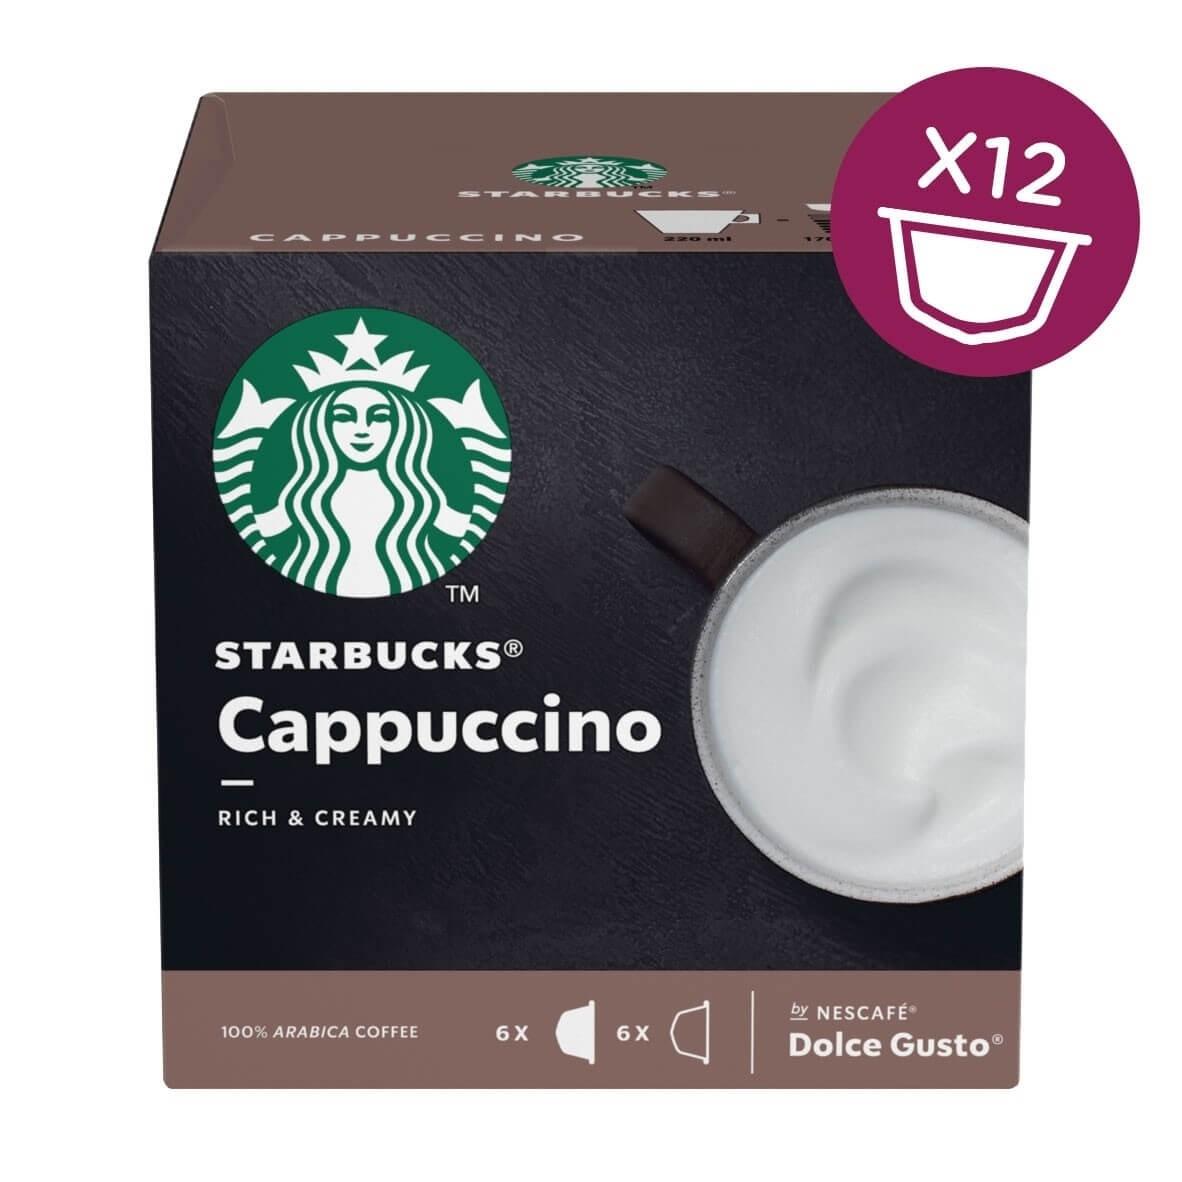 Starbucks Cappuccino Coffee Pod by Dolce Gusto (UK Imported) สตาร์บัค คาปูชิโน่ กาแฟคั่วบด 10g. x 12capsules